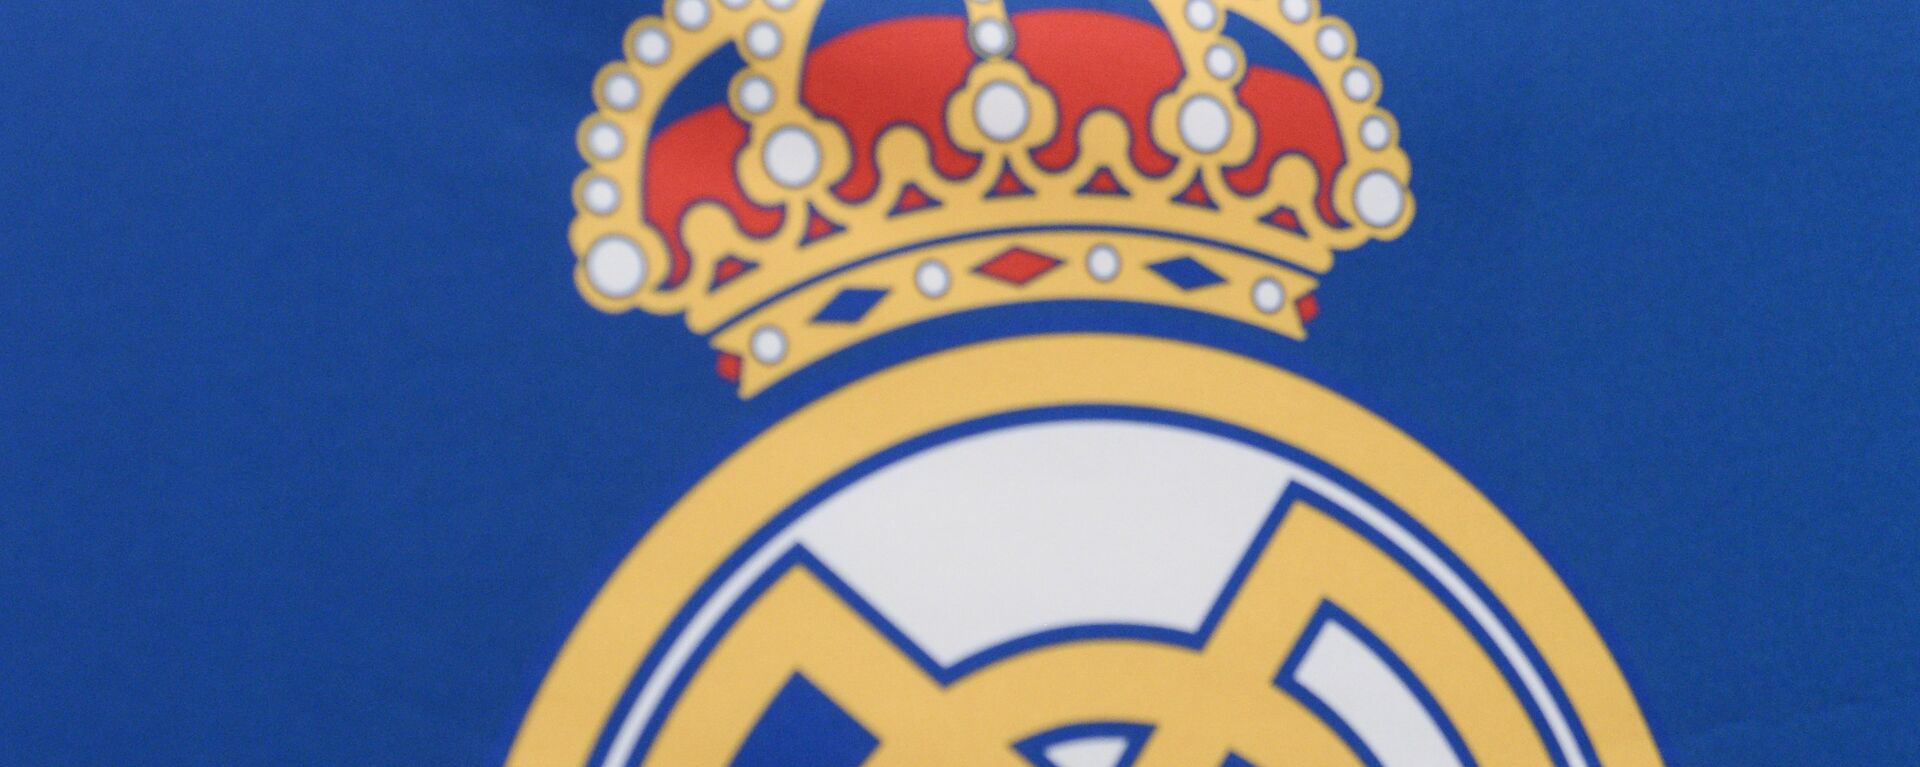 Real Madrid logo - Sputnik Mundo, 1920, 10.08.2021